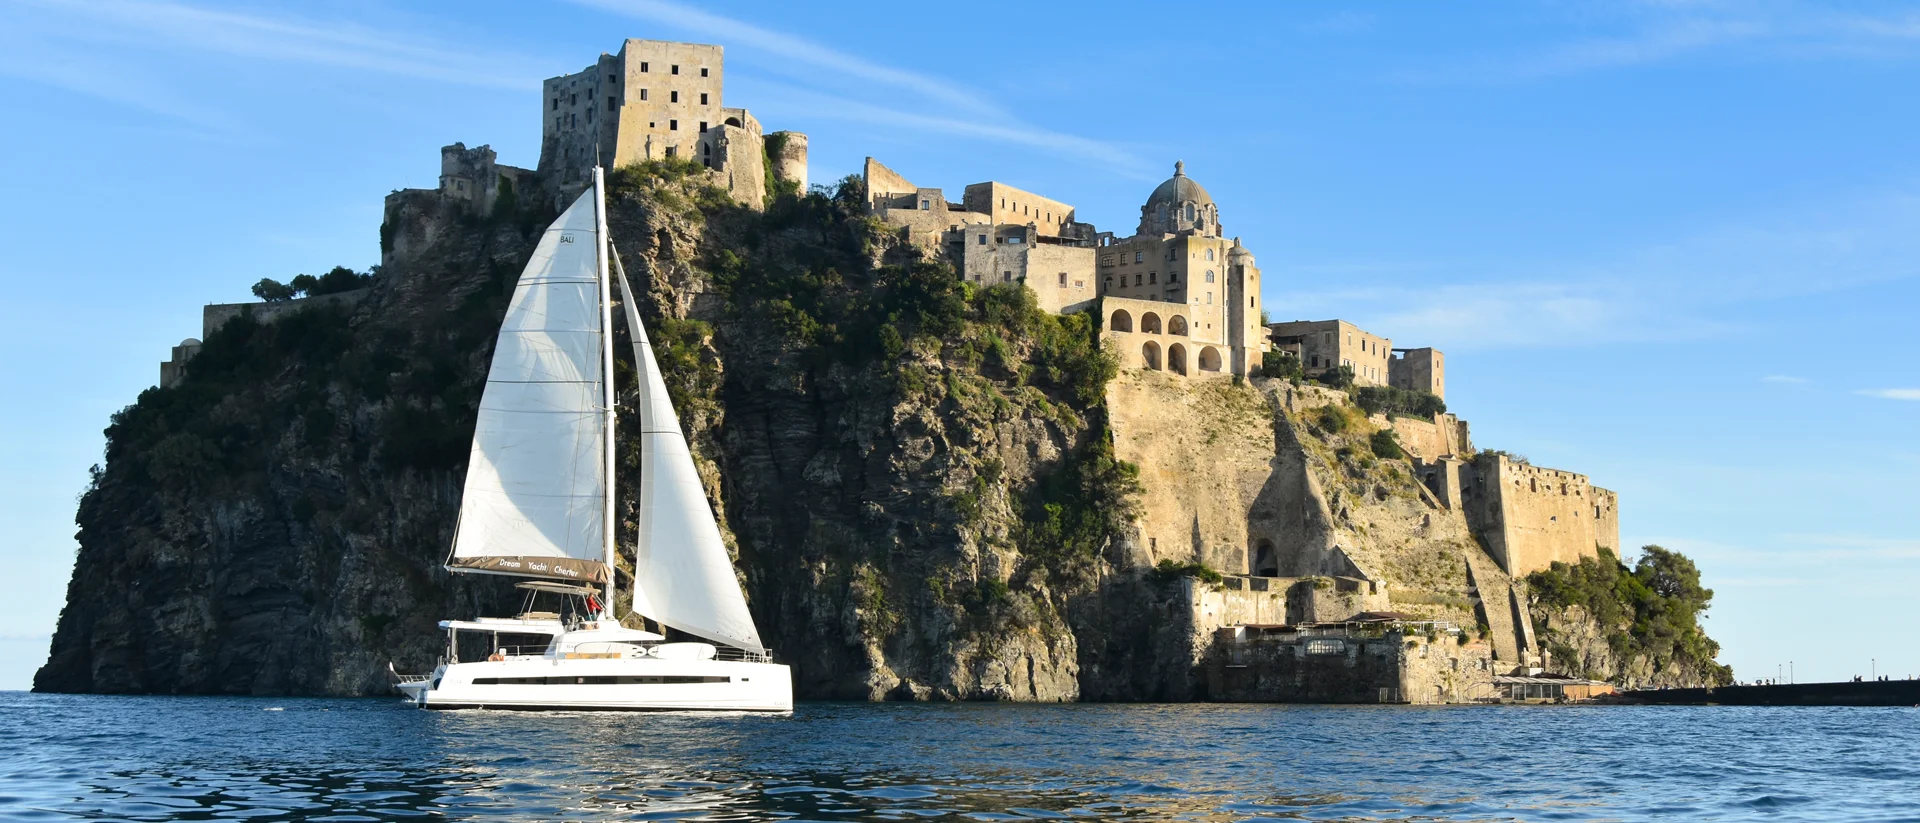 Naples sailing island ancient architecture sailboat charter